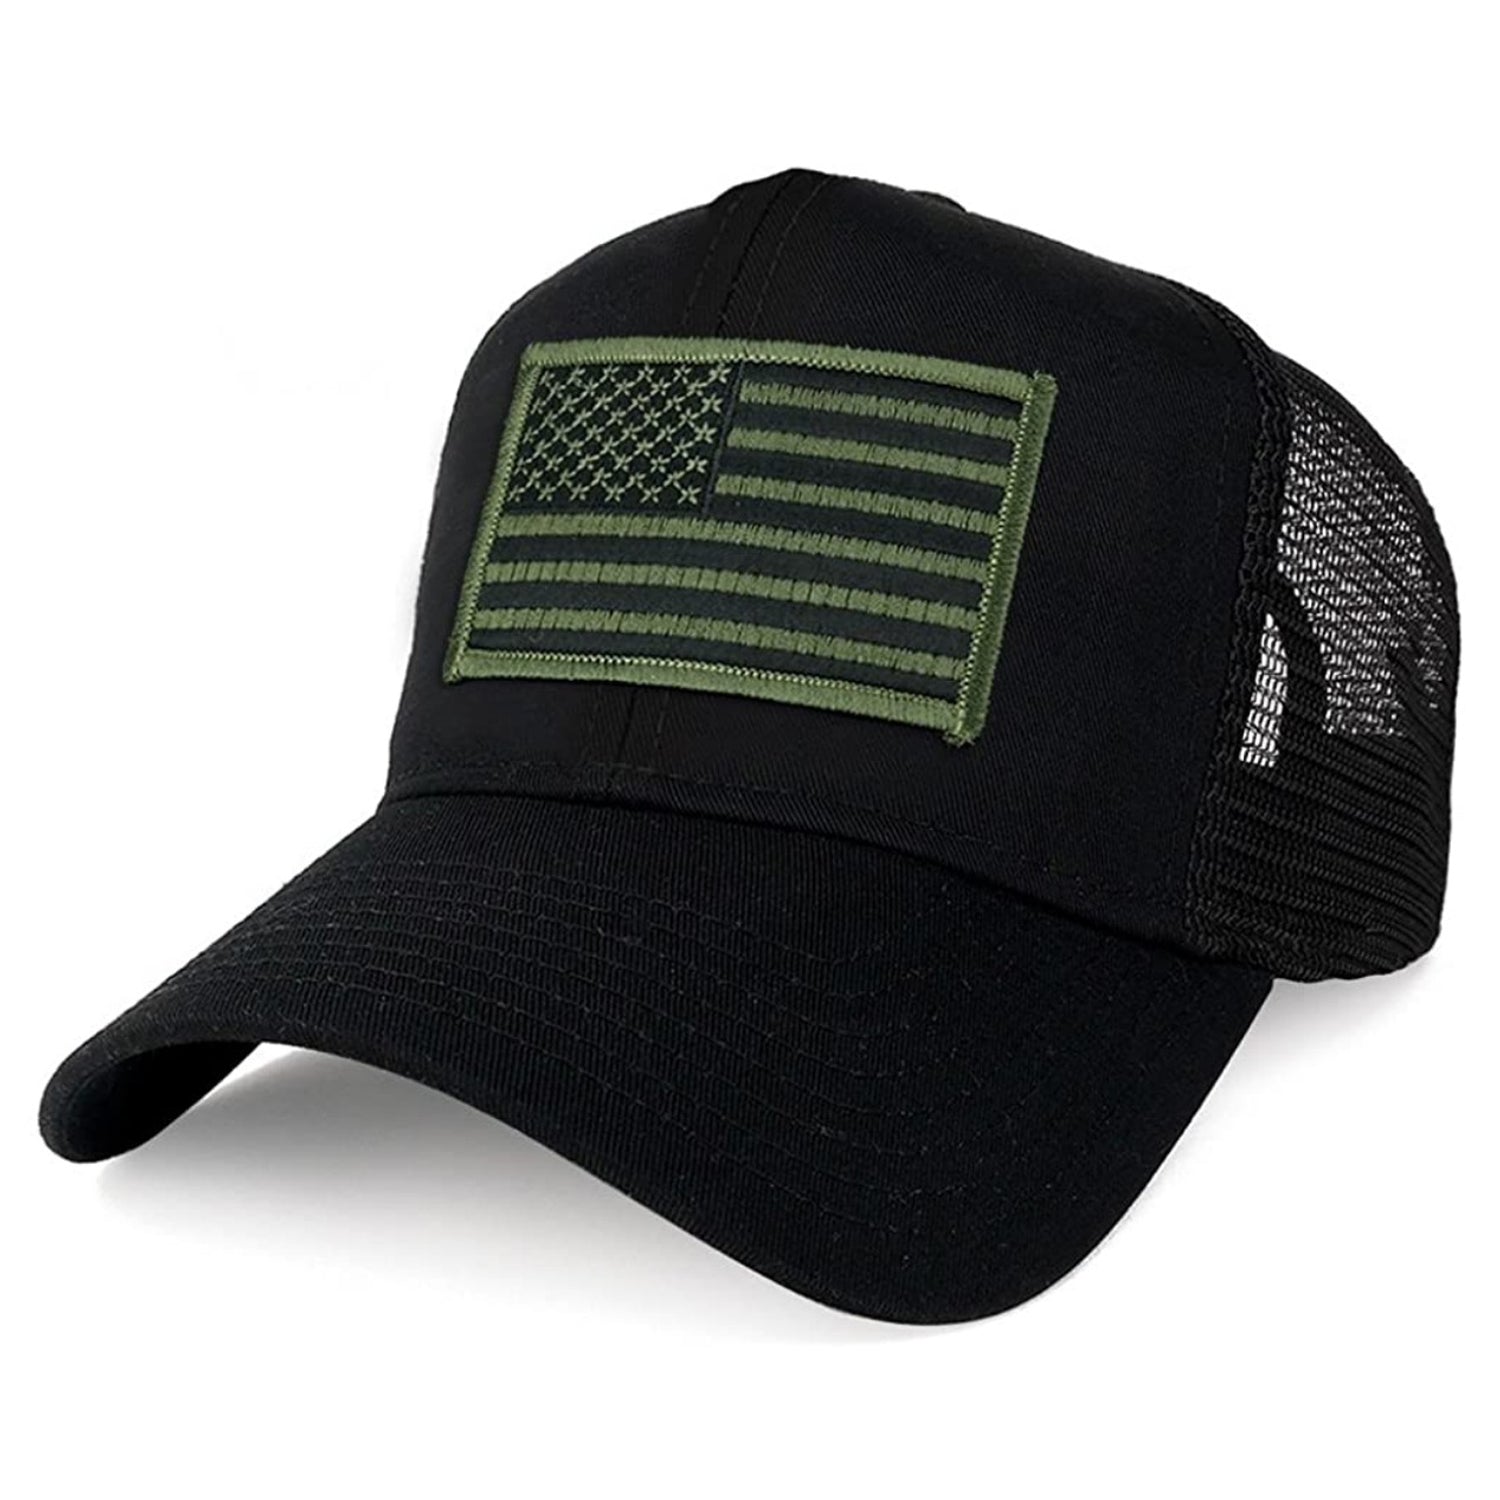 Big Black Hats in Structured Baseball Caps | Big Hat Store 3XL